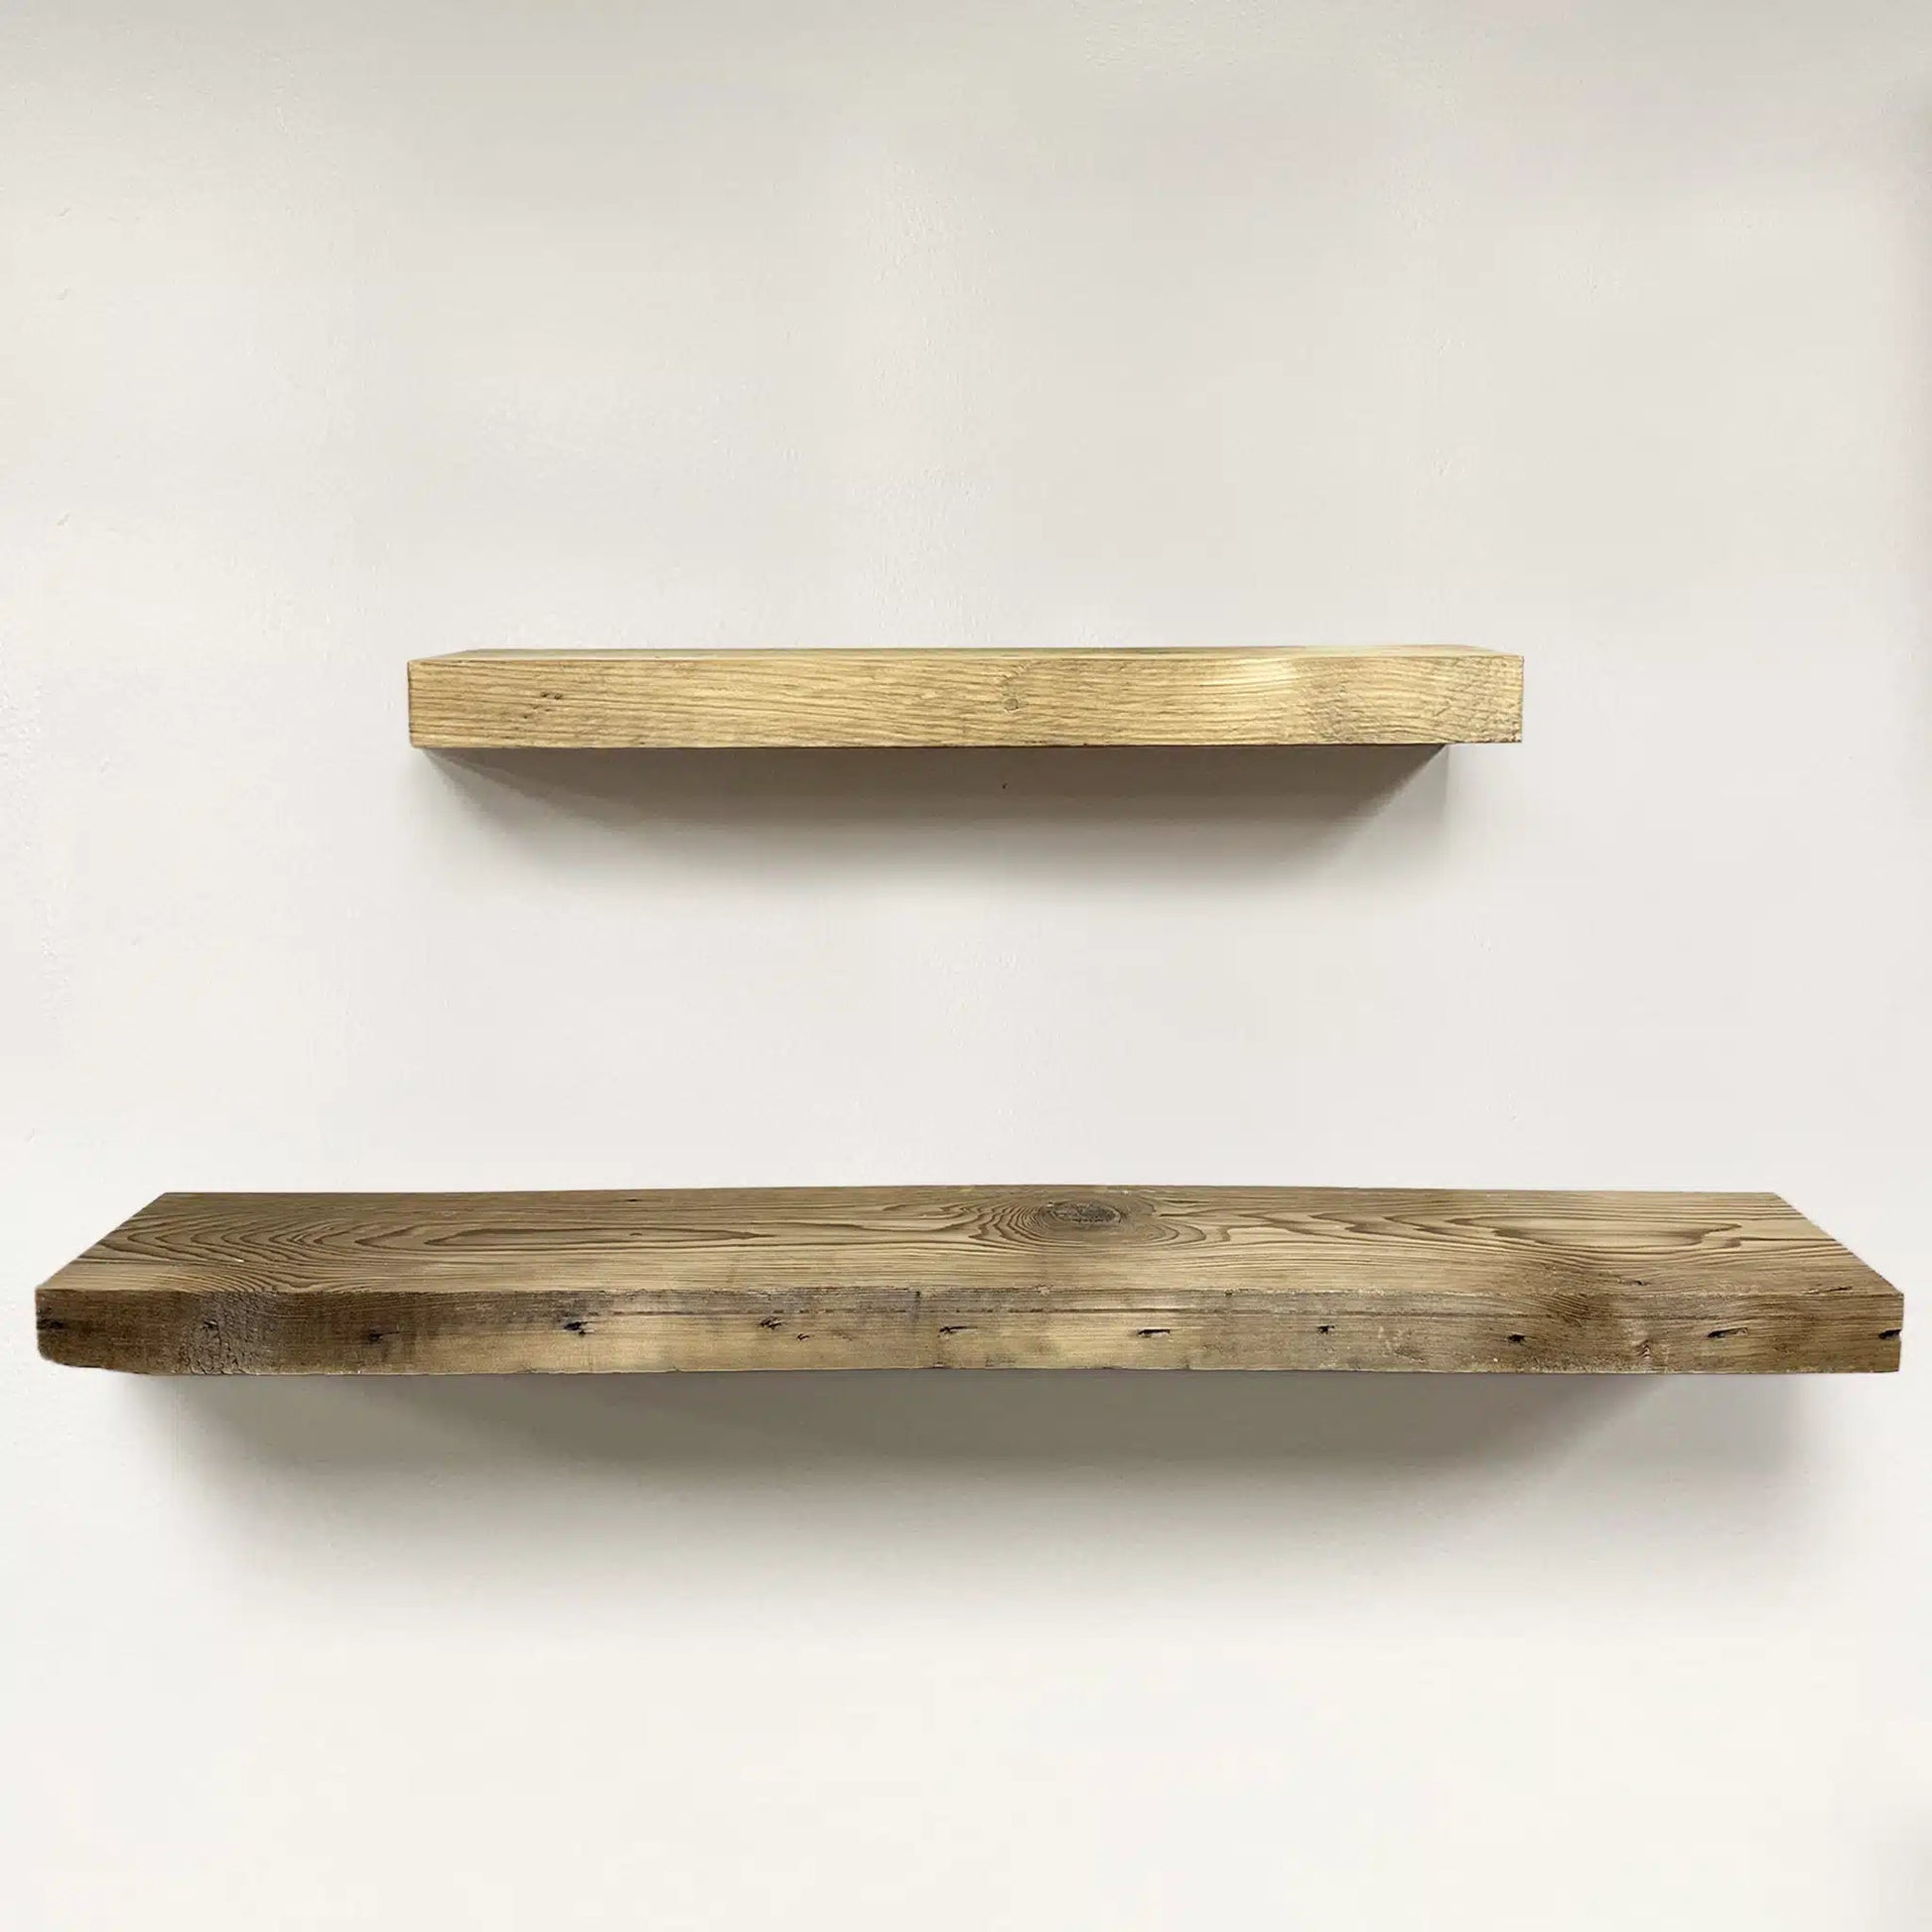 Thick Oak Floating Shelves in Medium to Long Custom Sizes